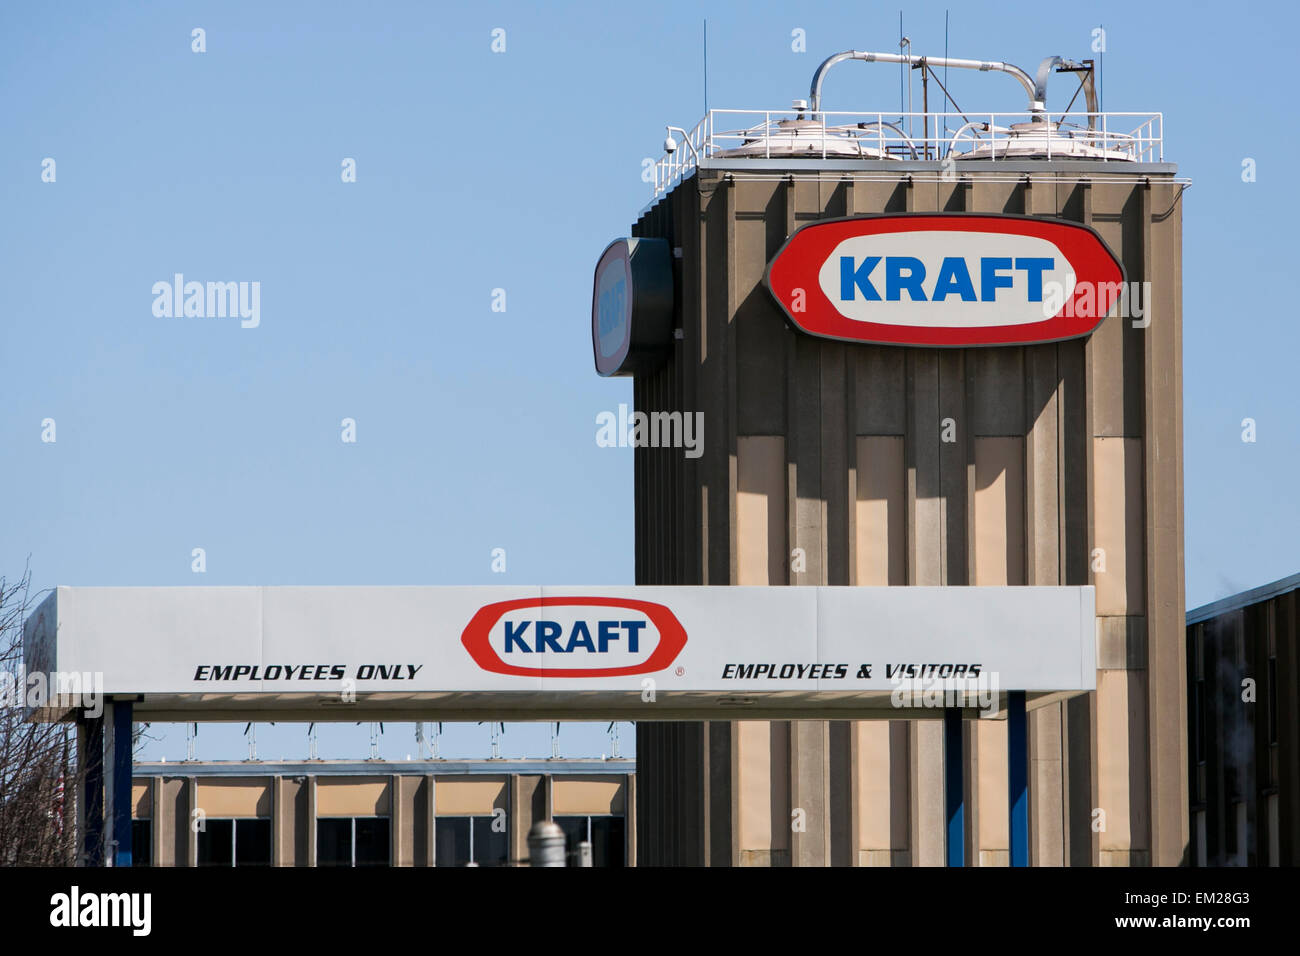 Kraft Foods Company Stock Photos & Kraft Foods Company Stock Images - Alamy